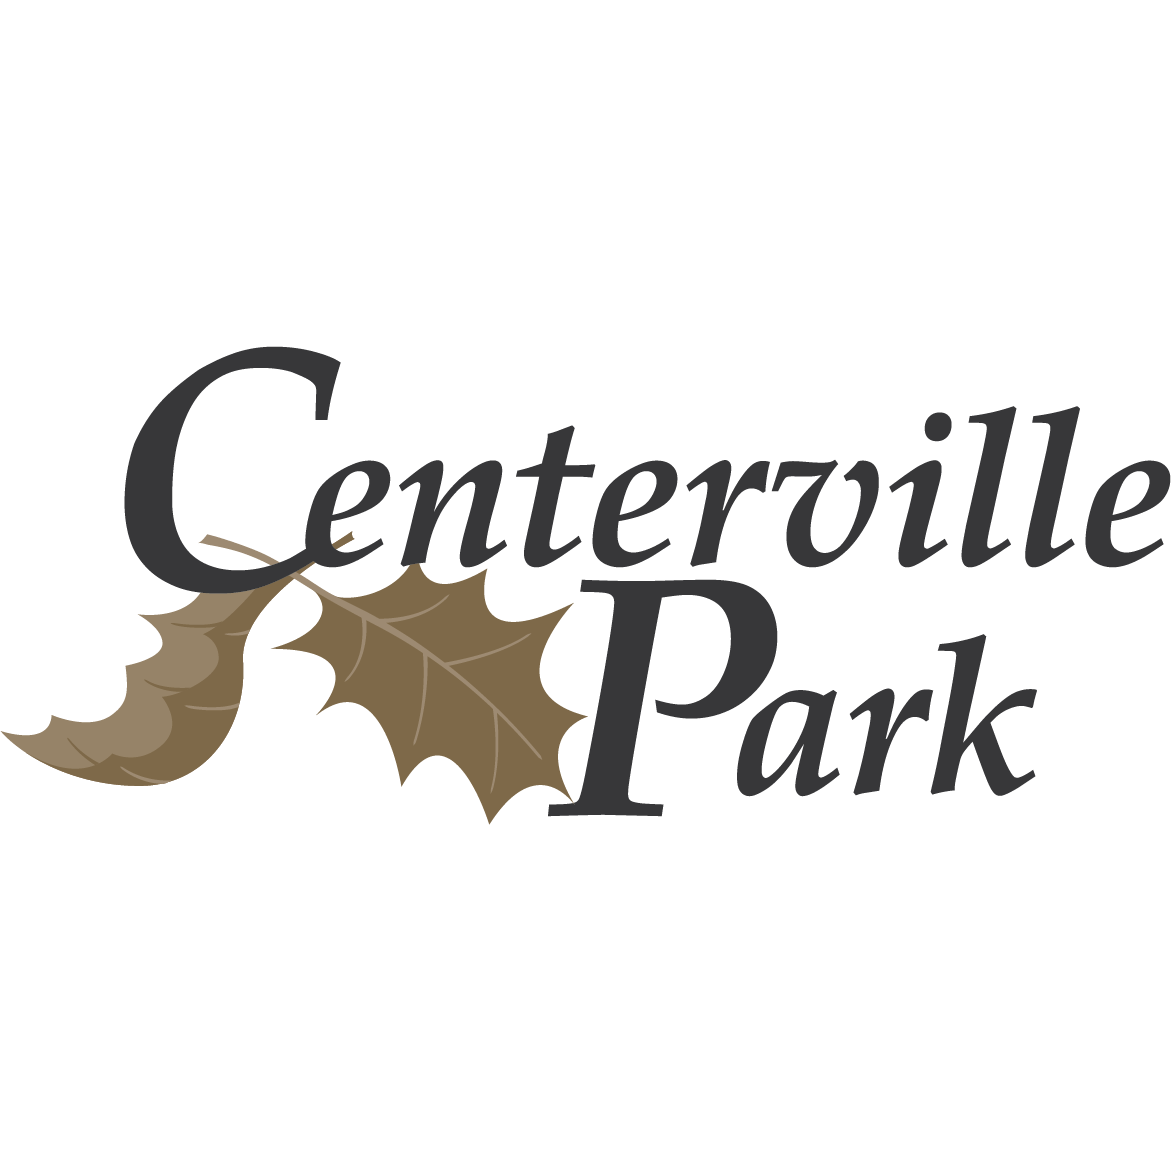 Centerville Park Apartments - West Carrollton, OH 45449 - (937)863-9123 | ShowMeLocal.com